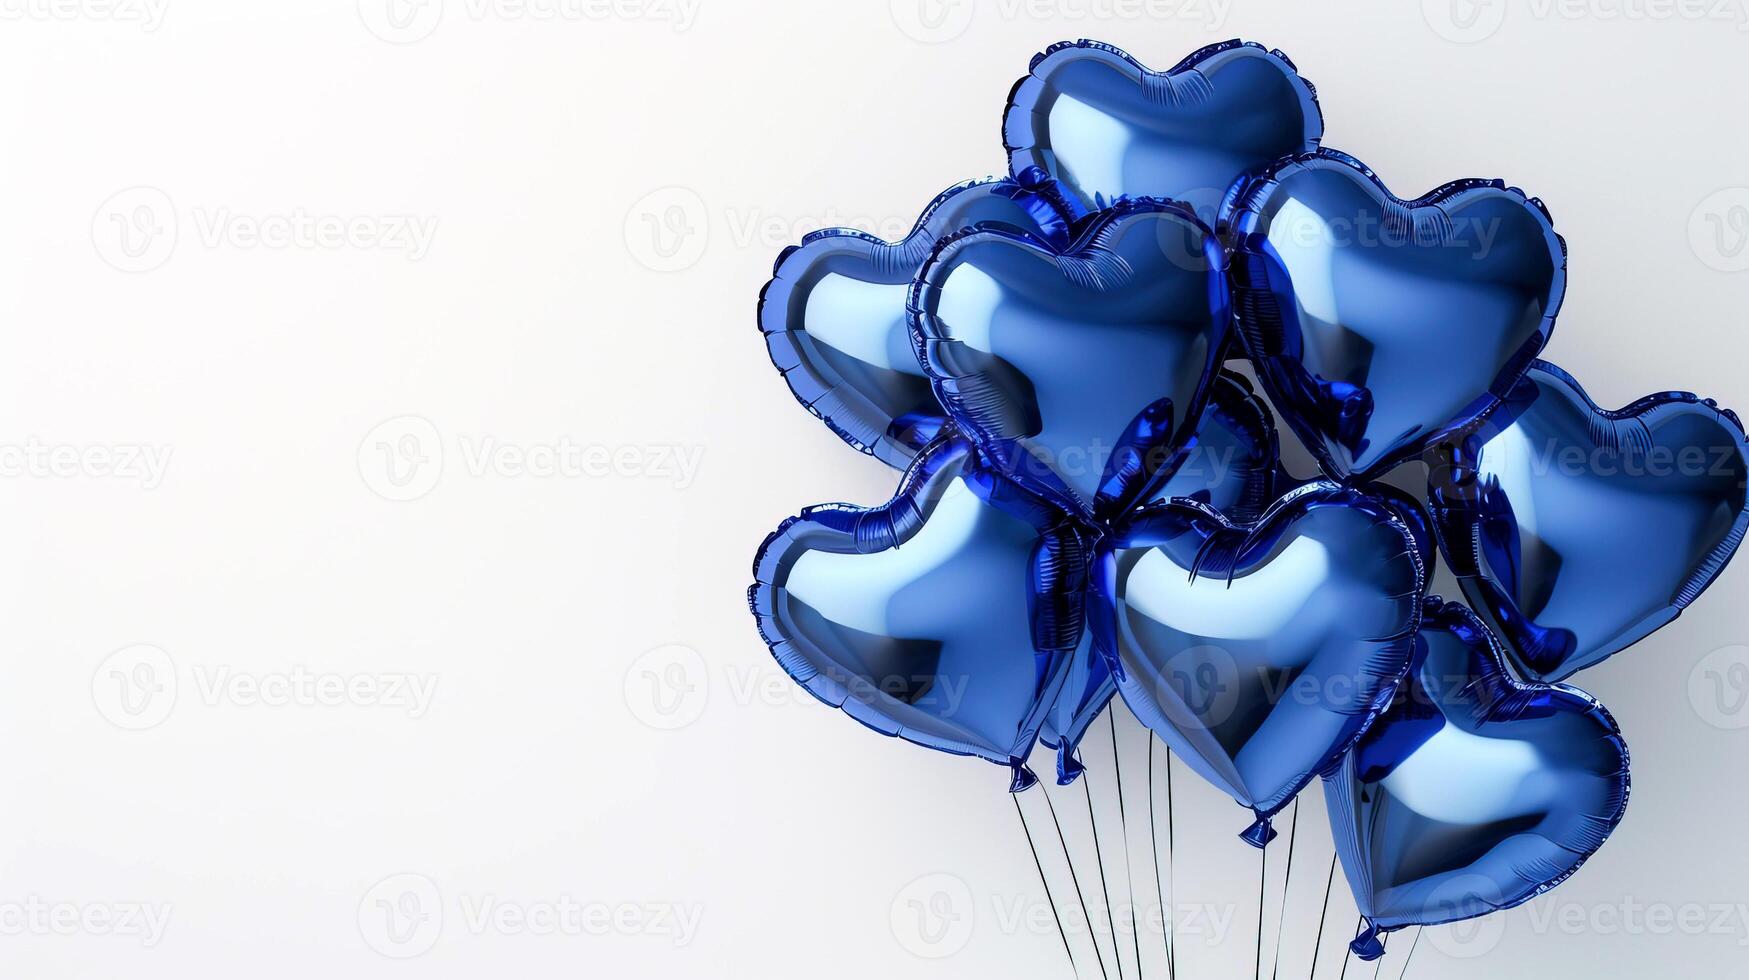 ai generado azul corazón conformado helio globos en blanco antecedentes. 8 metálico azul pelotas con espacio para texto. San Valentín día o Boda fiesta decoración. foto